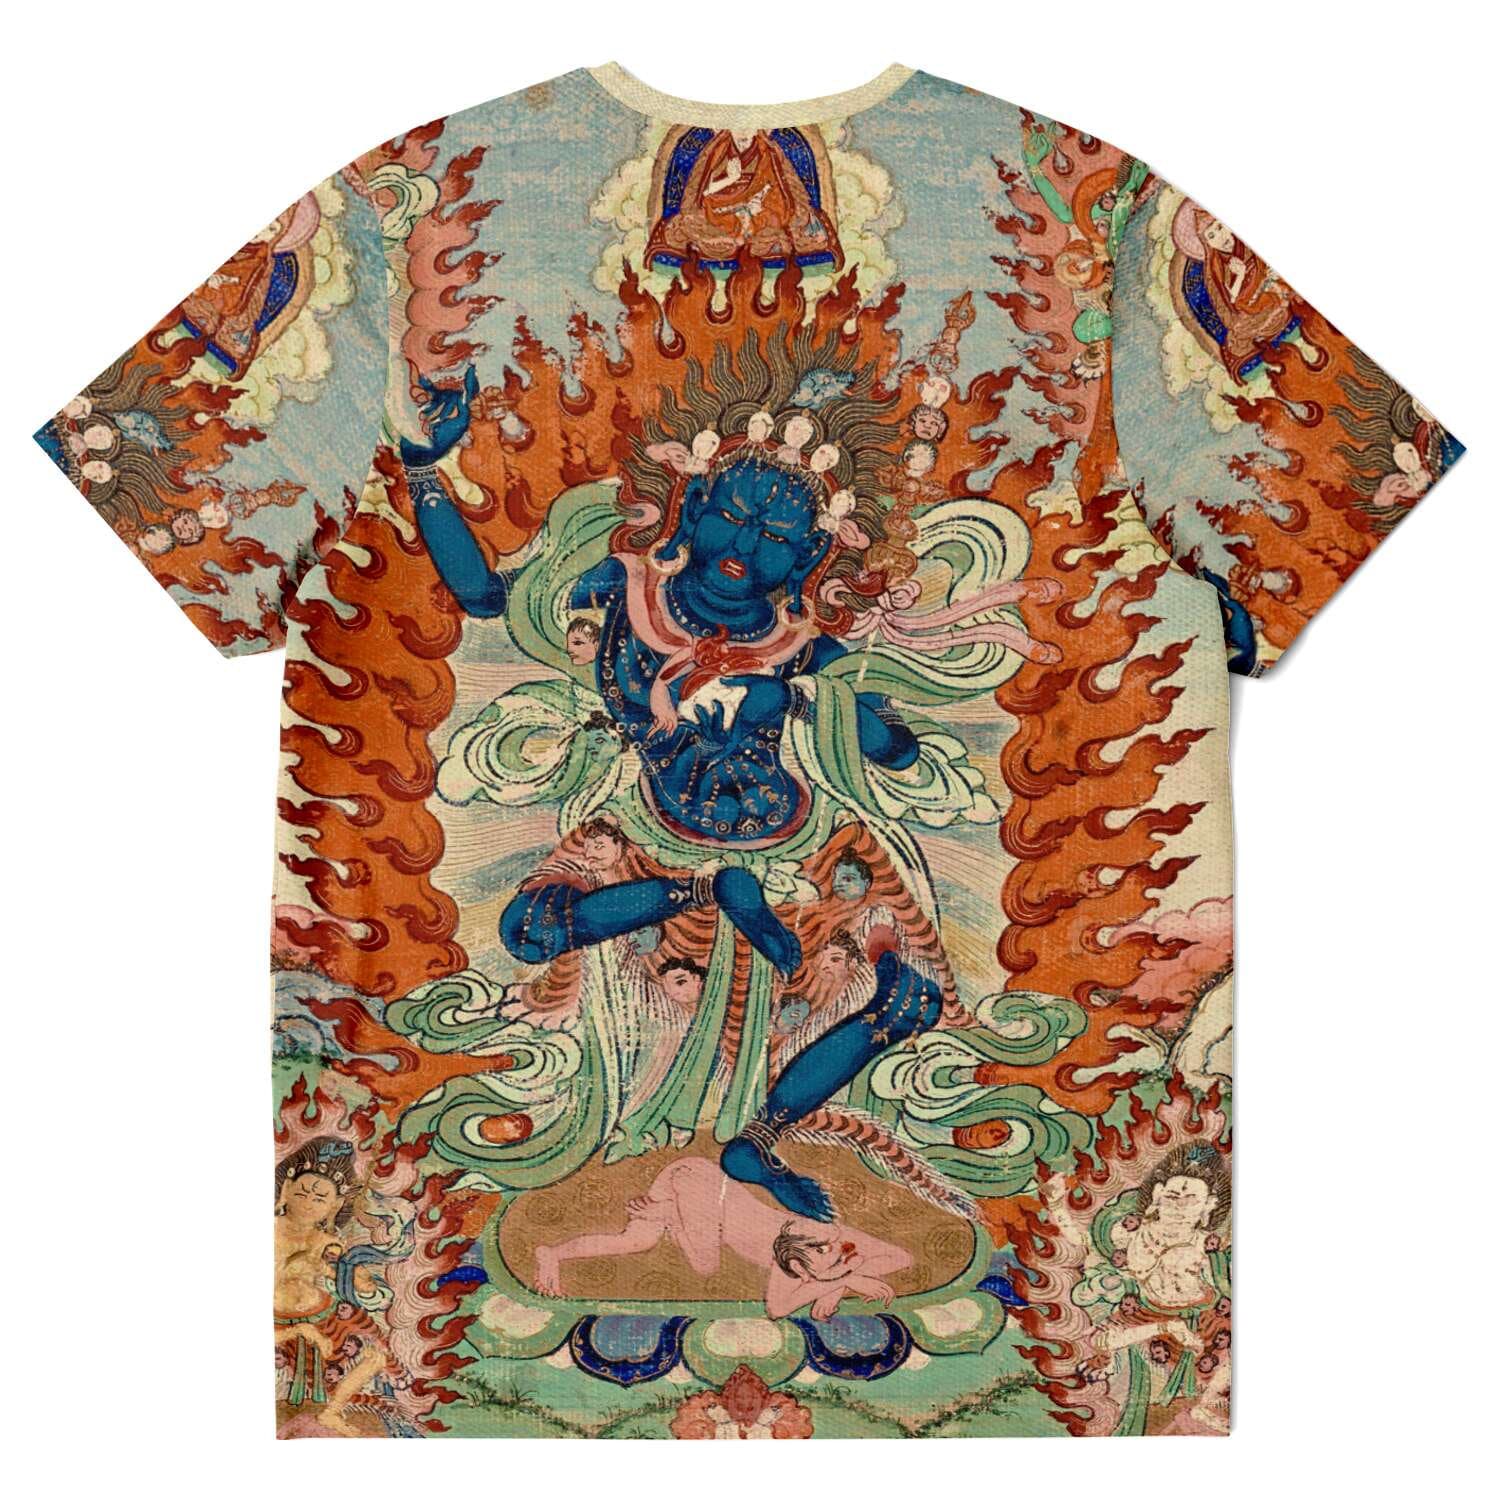 T-shirt Vajravarahi (Krodha Kali) Tibetan-Chinese Vajrayana Buddhist Tantric Goddess Thangka Antique Vintage Folk Mythology Mahayana Art Tee T-Shirt